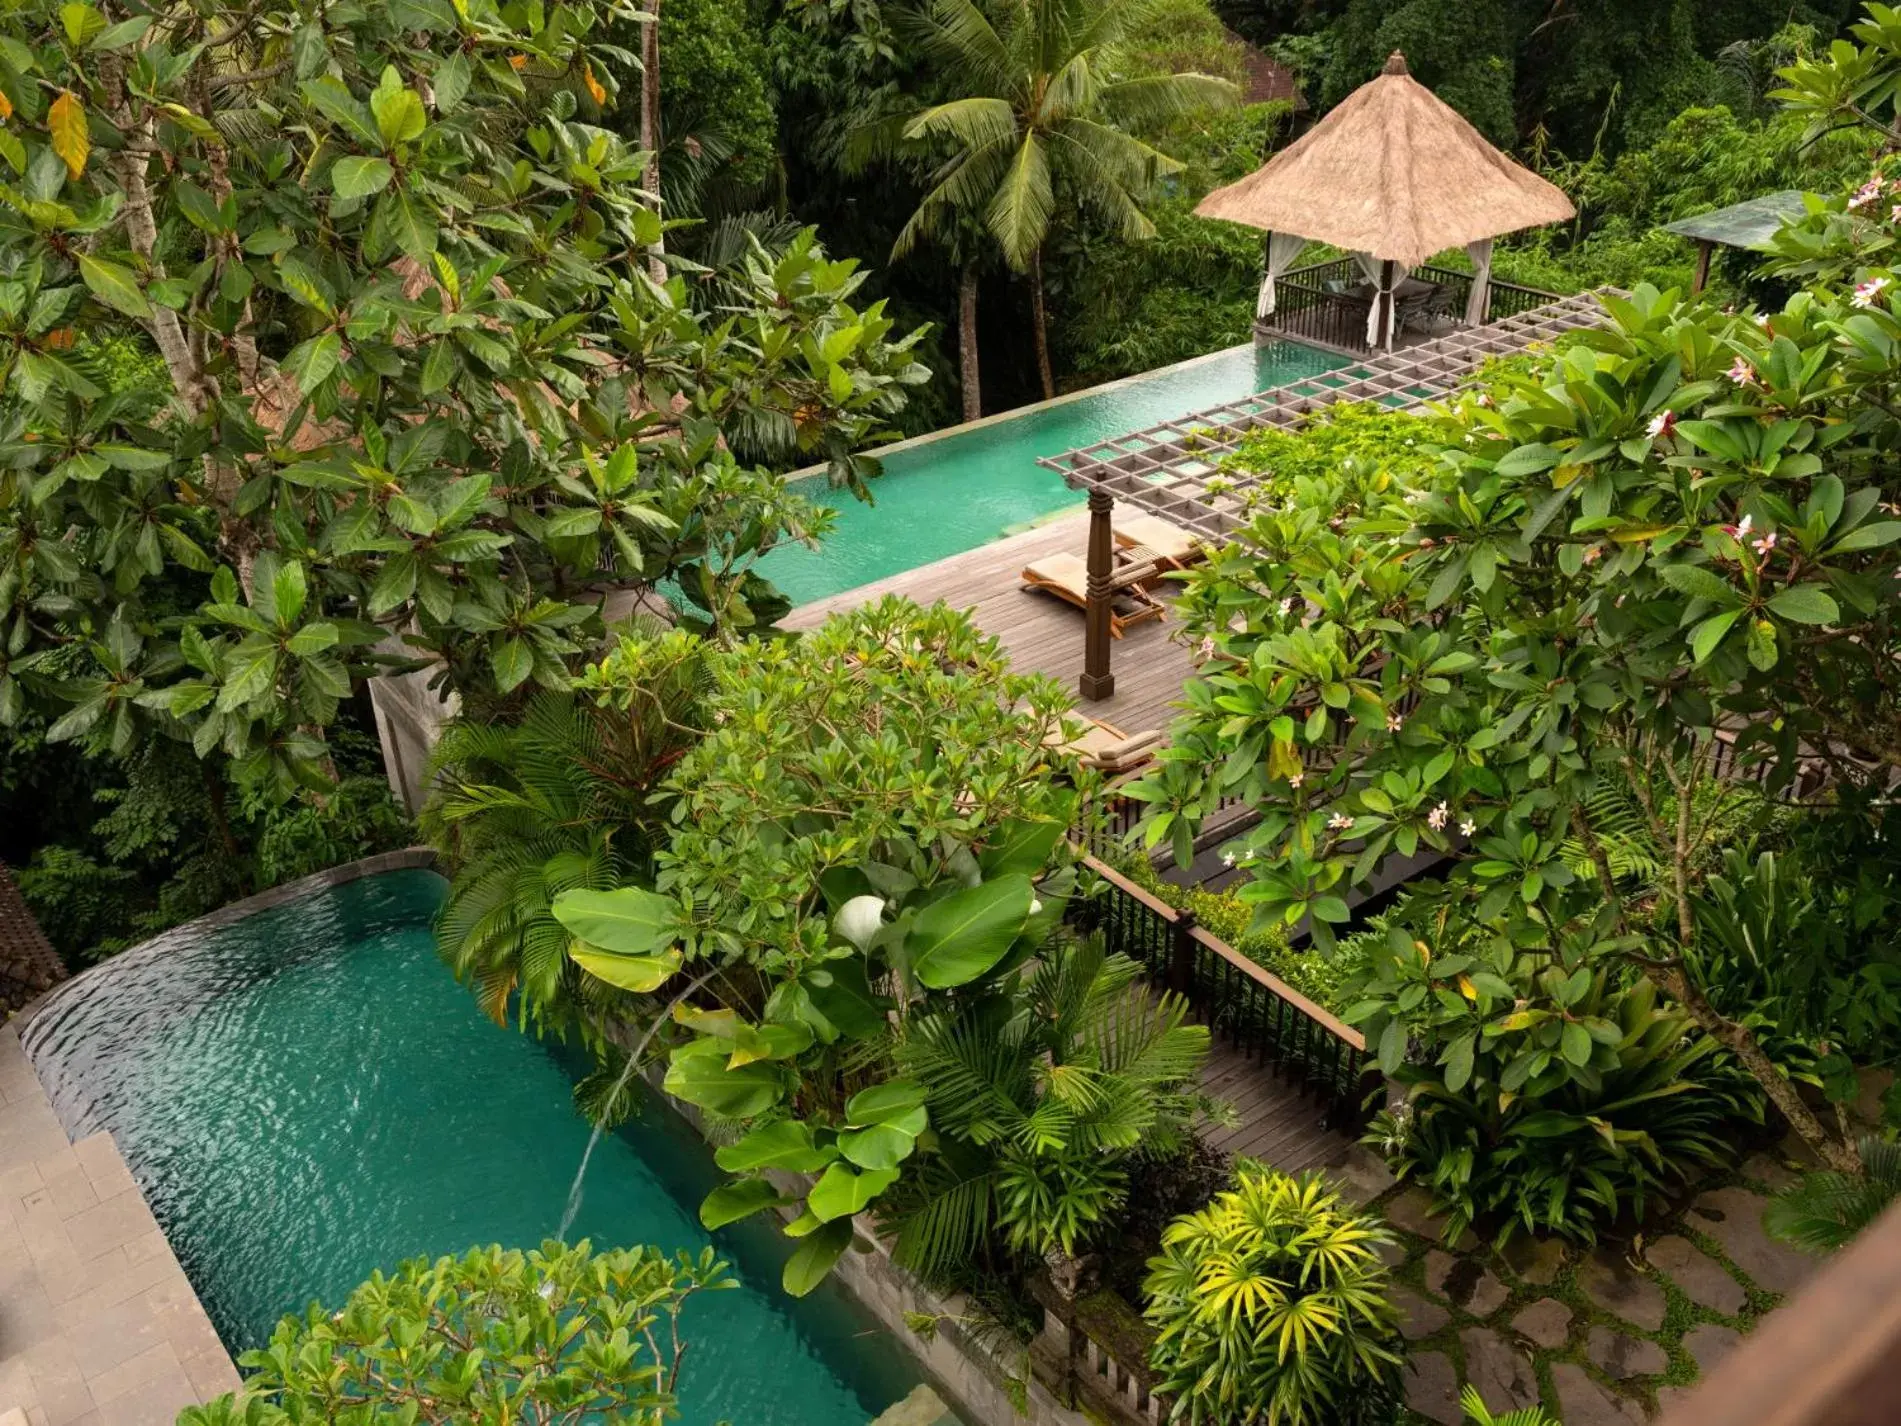 On site, Pool View in Adiwana Resort Jembawan